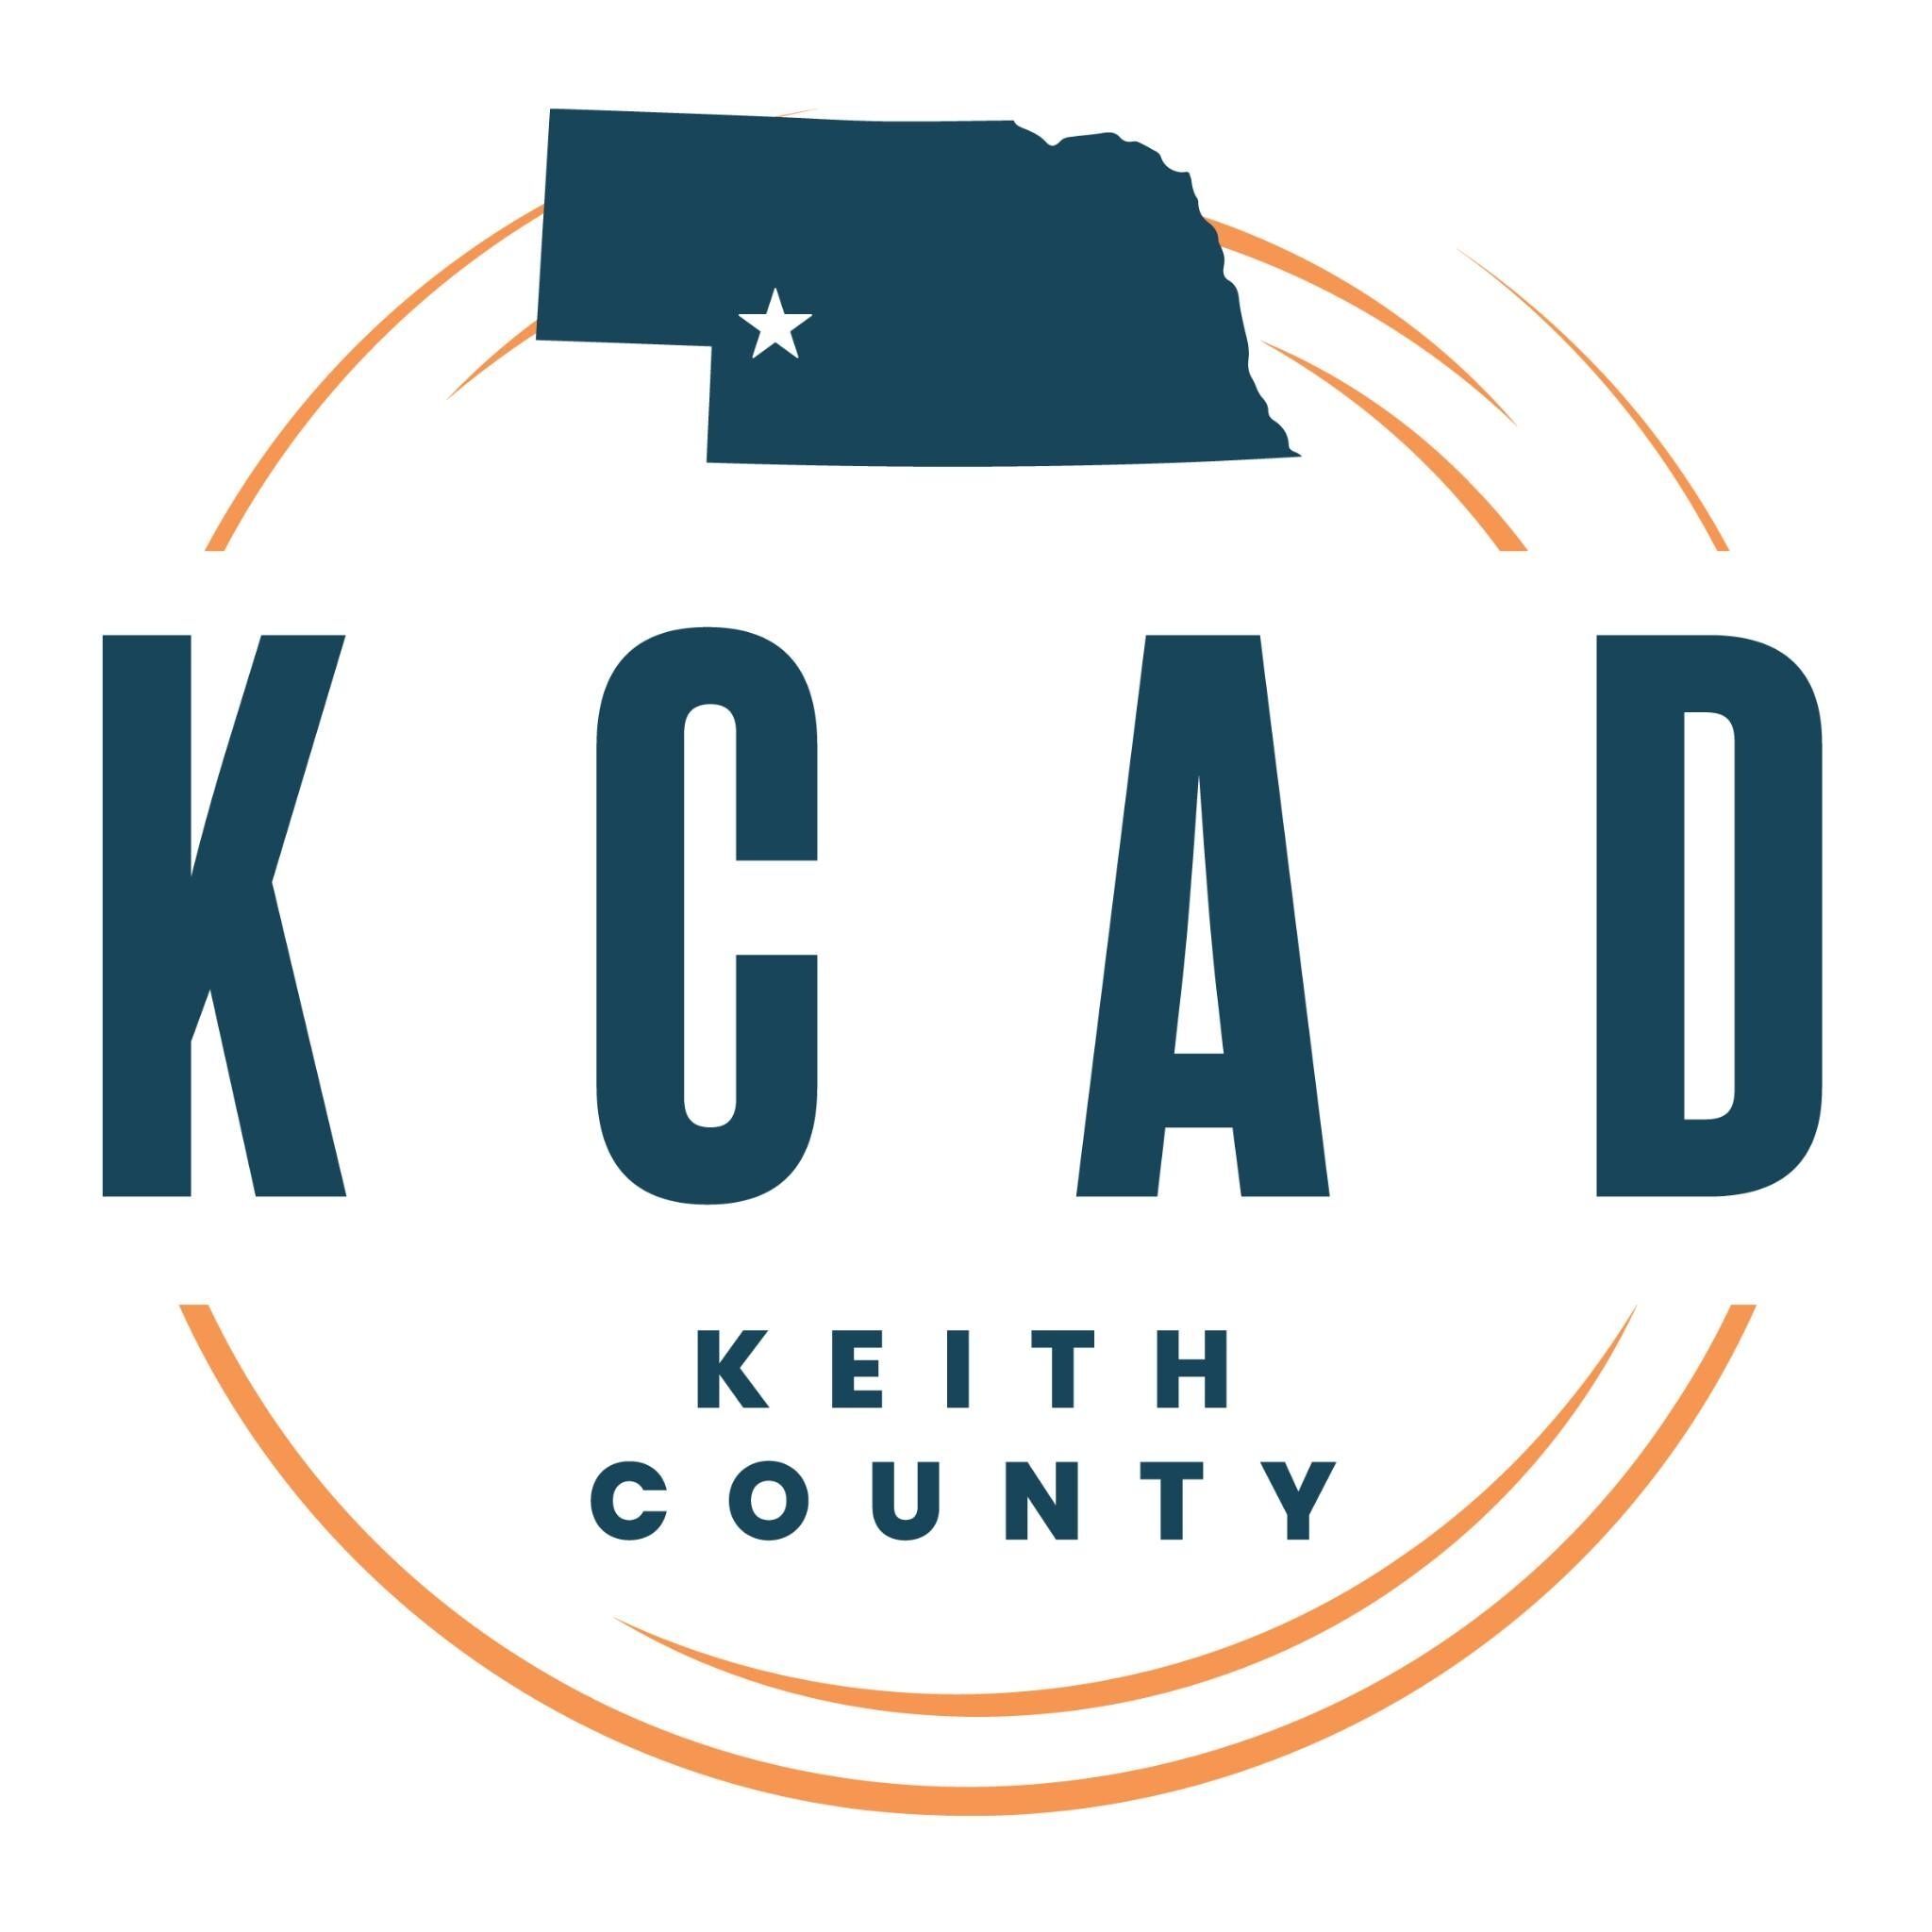 Keith County Area Development Website